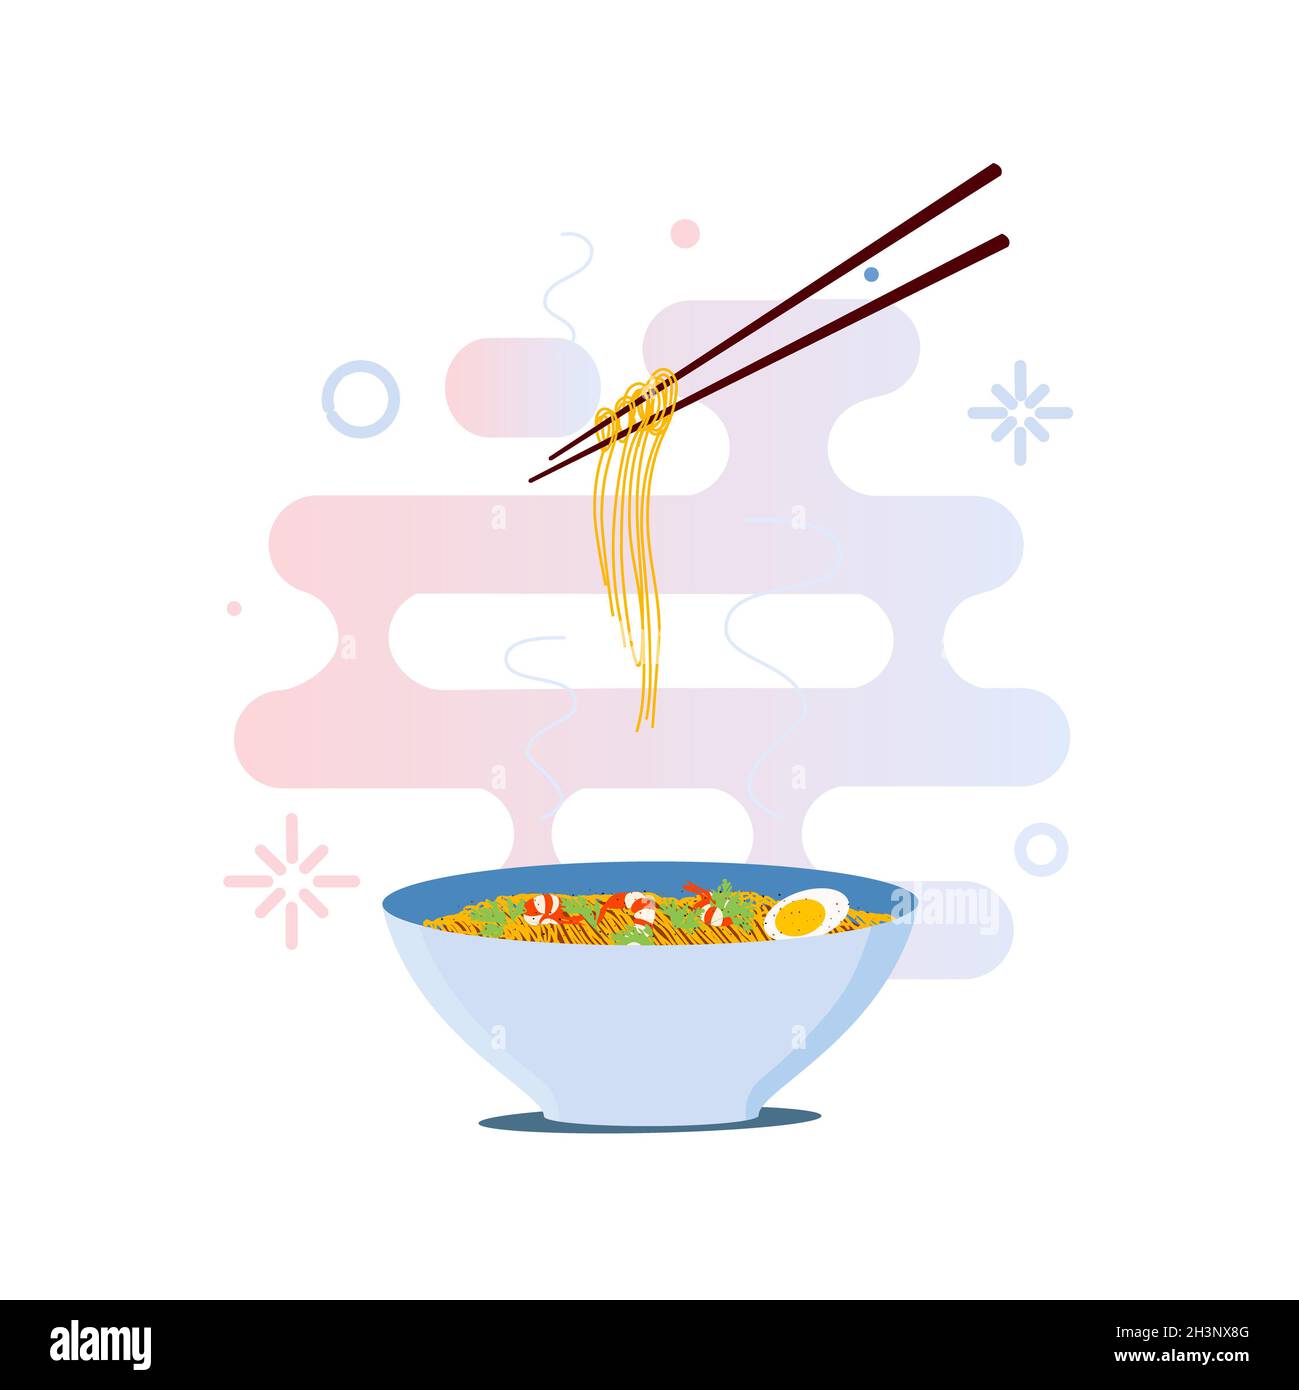 Noodles and chopsticks, illustration Stock Photo